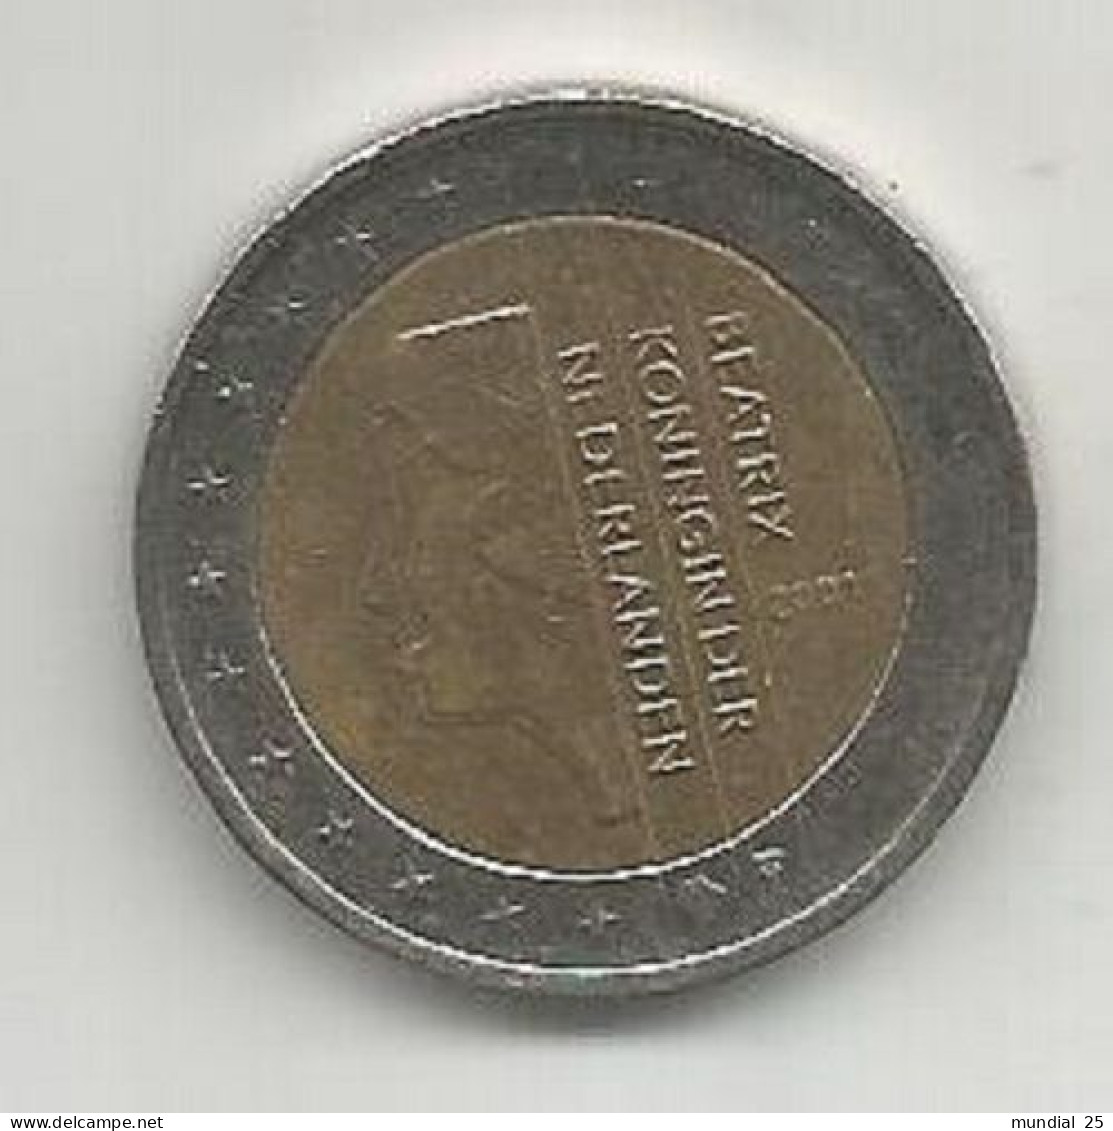 NETHERLANDS 2 EURO 2001 - Netherlands